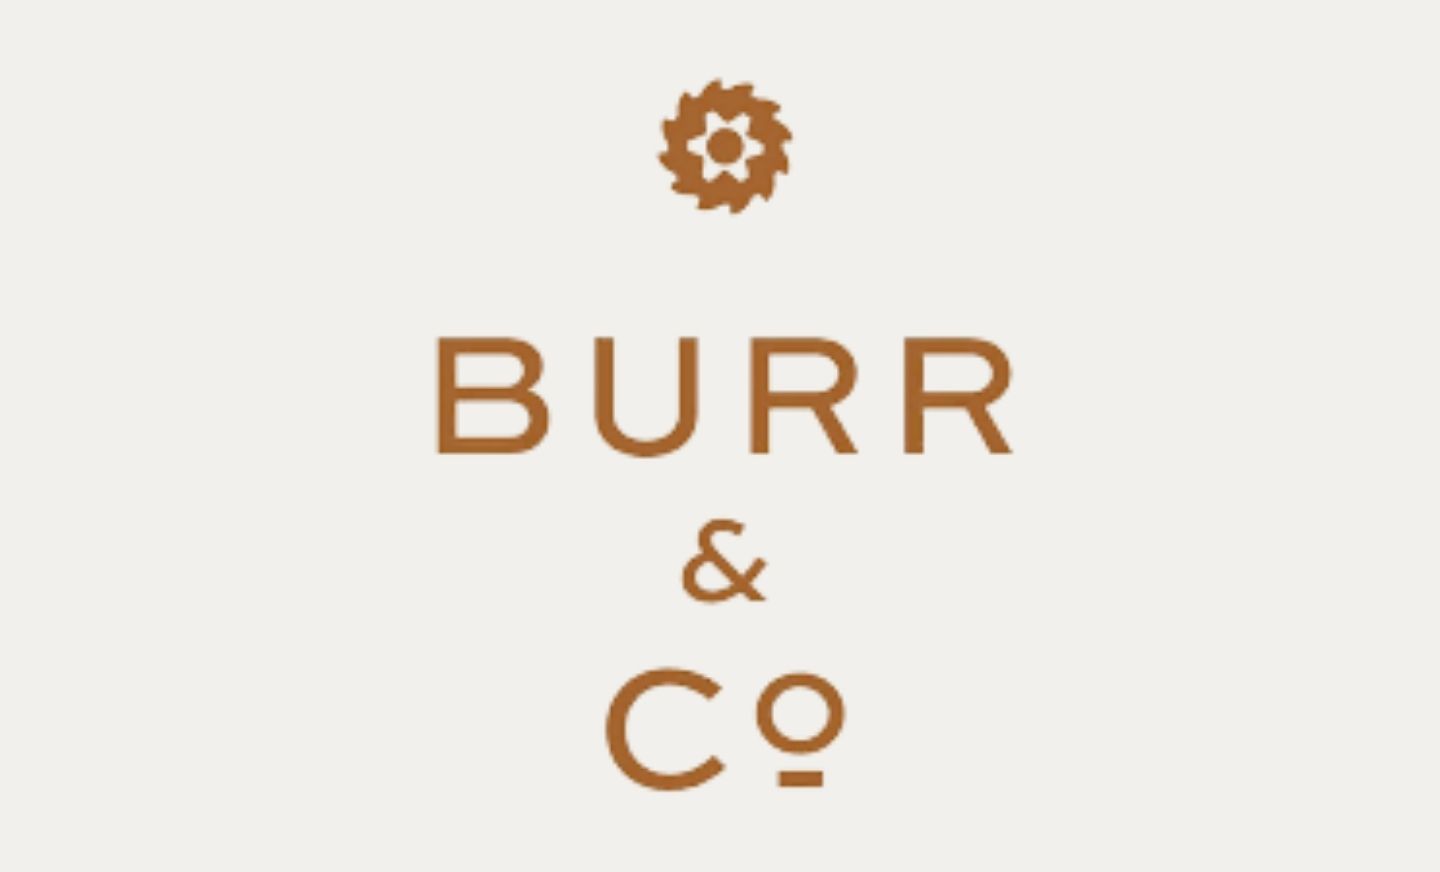 Burr & Co